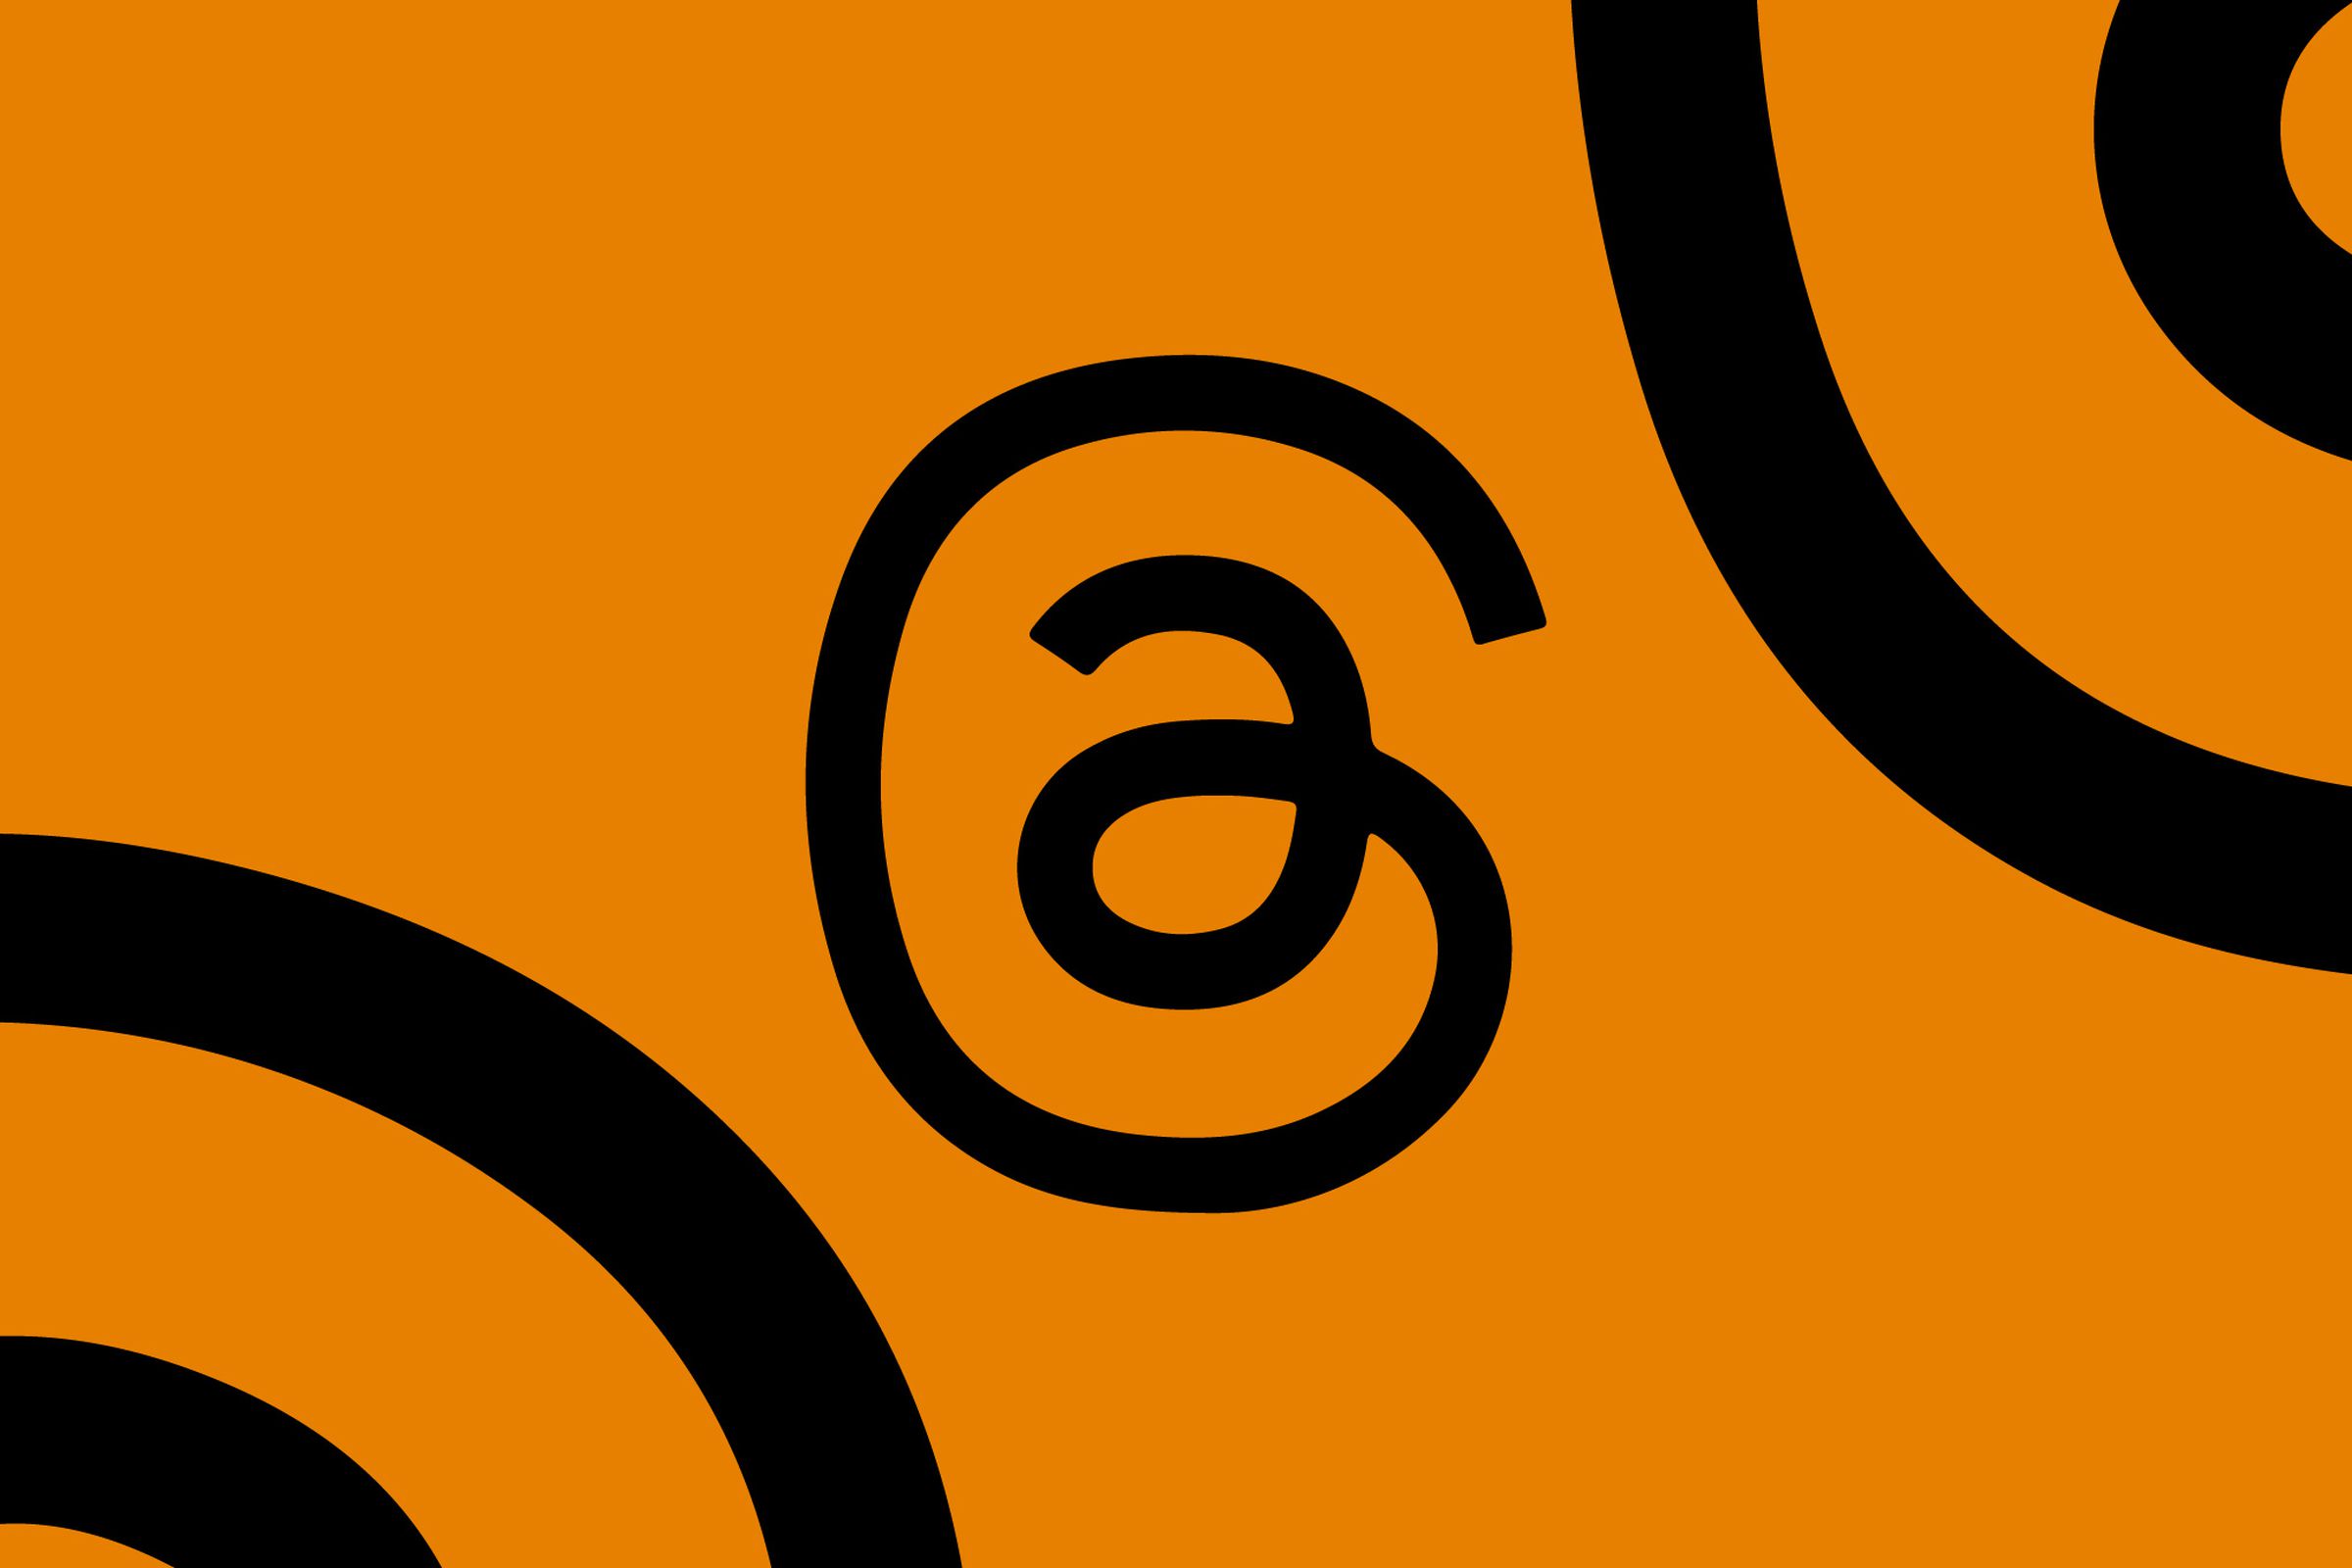 Illustration of the Threads app logo